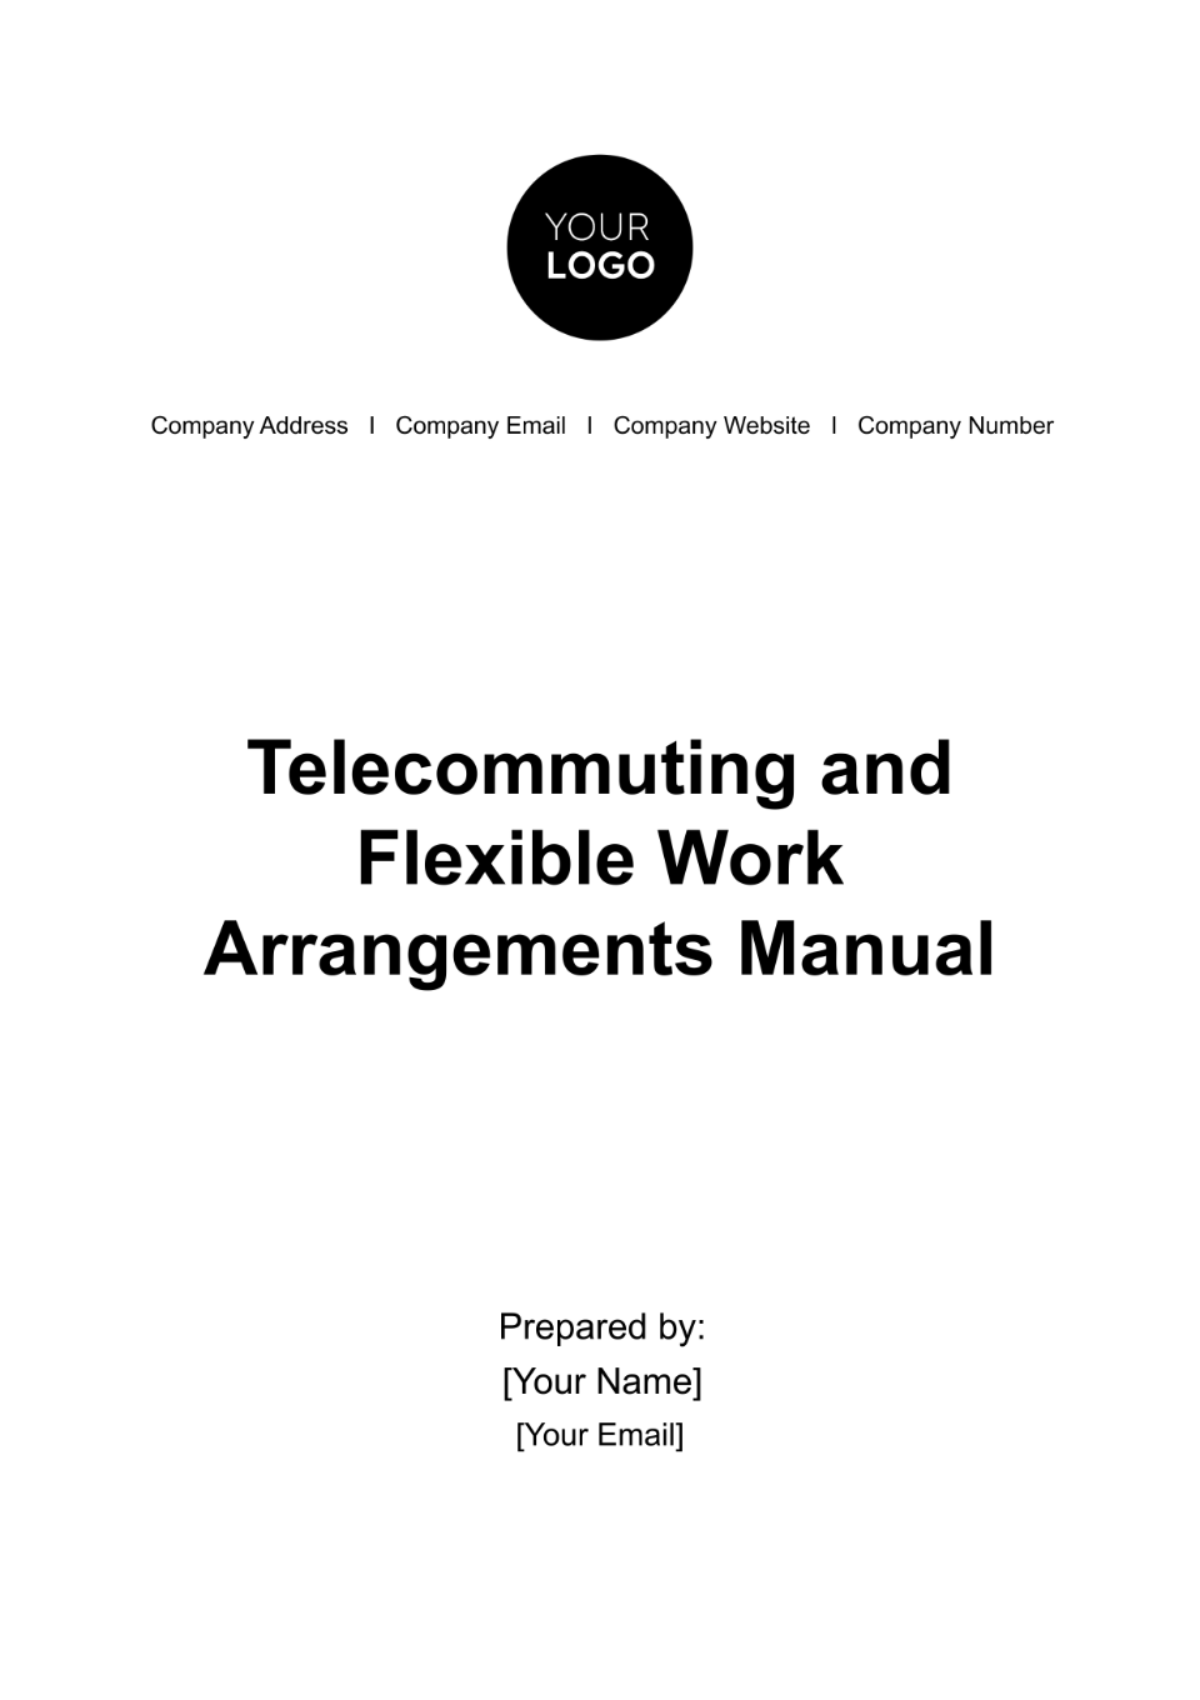 Telecommuting and Flexible Work Arrangements Manual HR Template